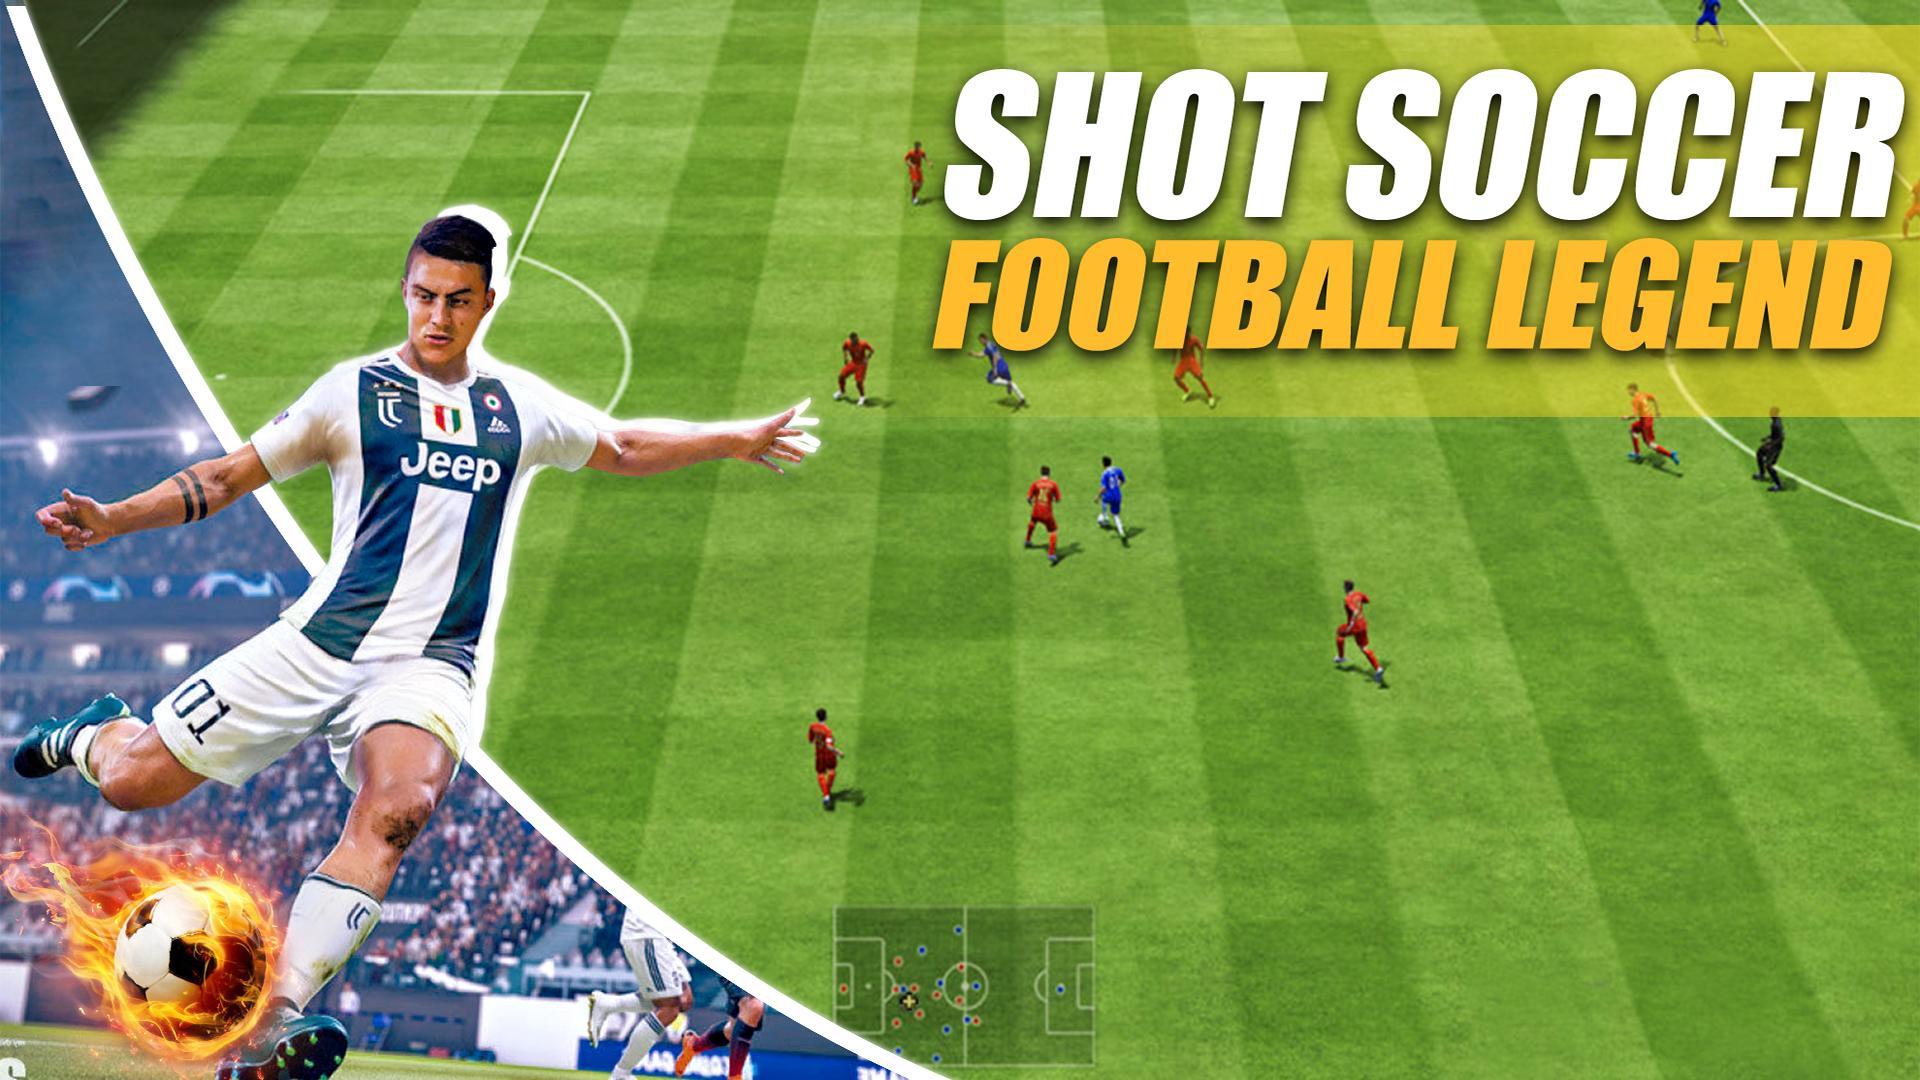 Shot Soccer-Football Legend for Android - APK Download